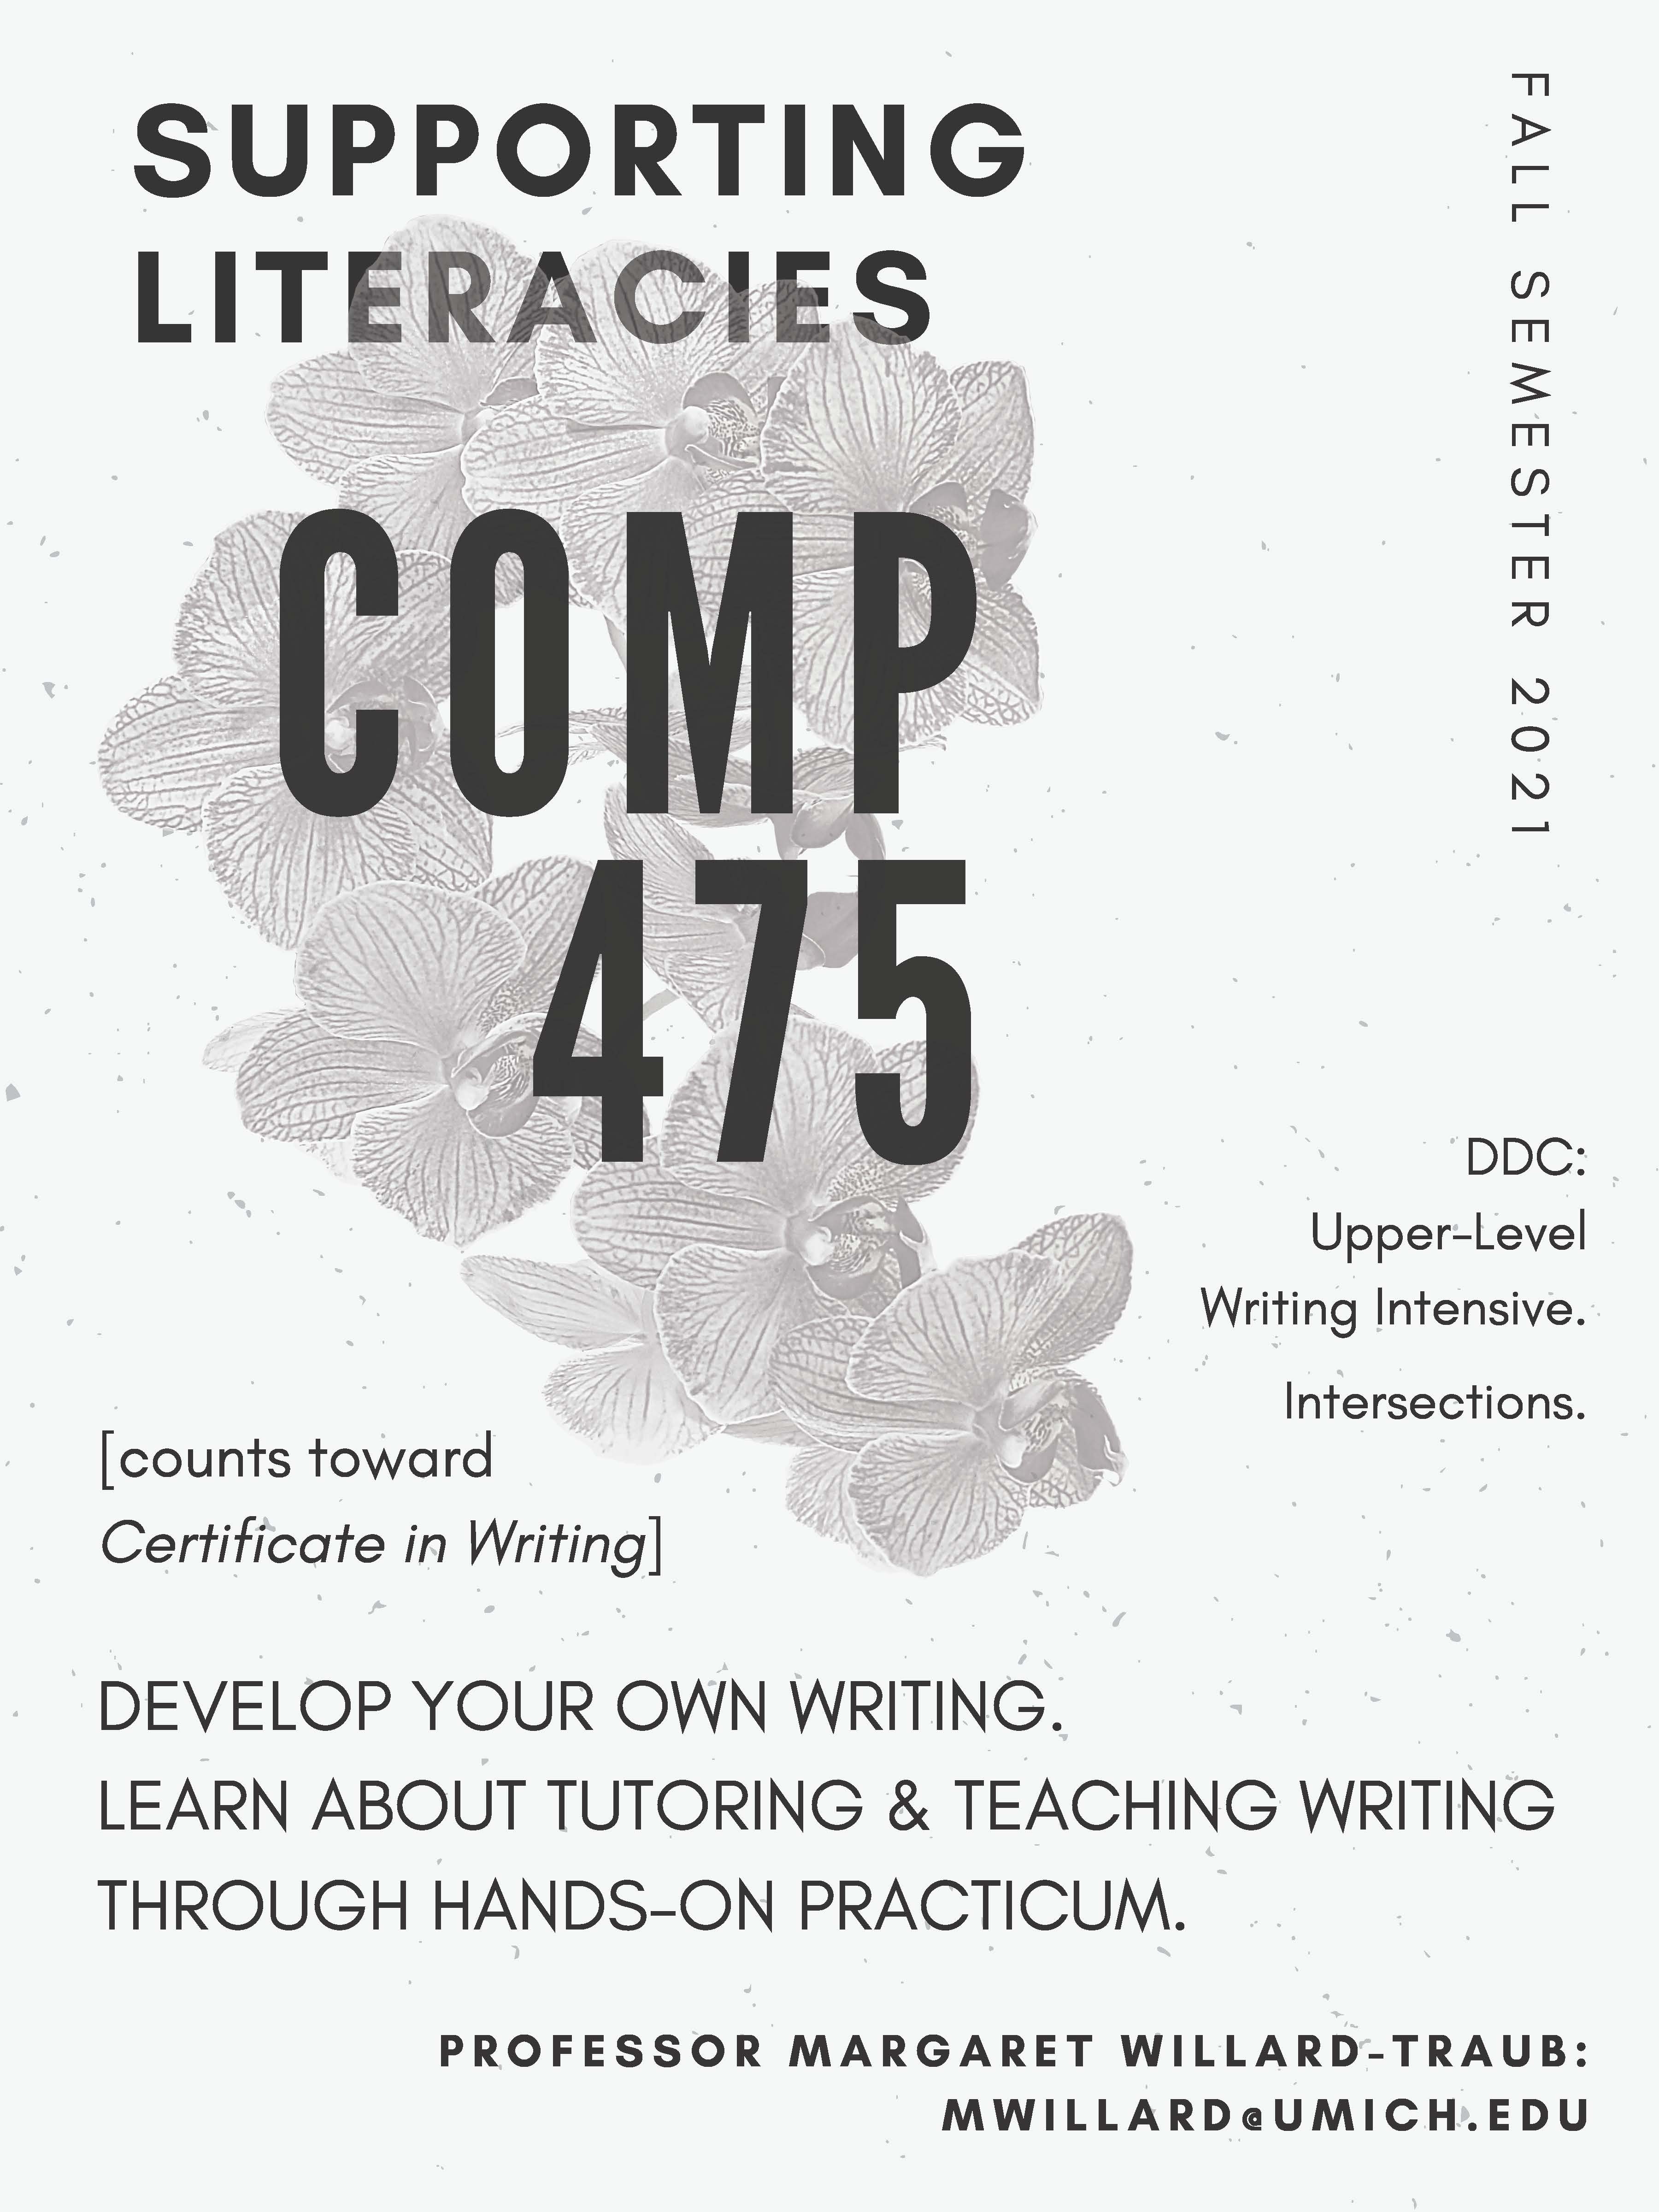 Supporting Literacies COMP 475 (Fall Semester 2021) Develop your own writing. Learn about tutoring & teaching writing through hands-on practicum. Professor Margaret Willard-Traub: mwillard@umich.edu. (Poster)